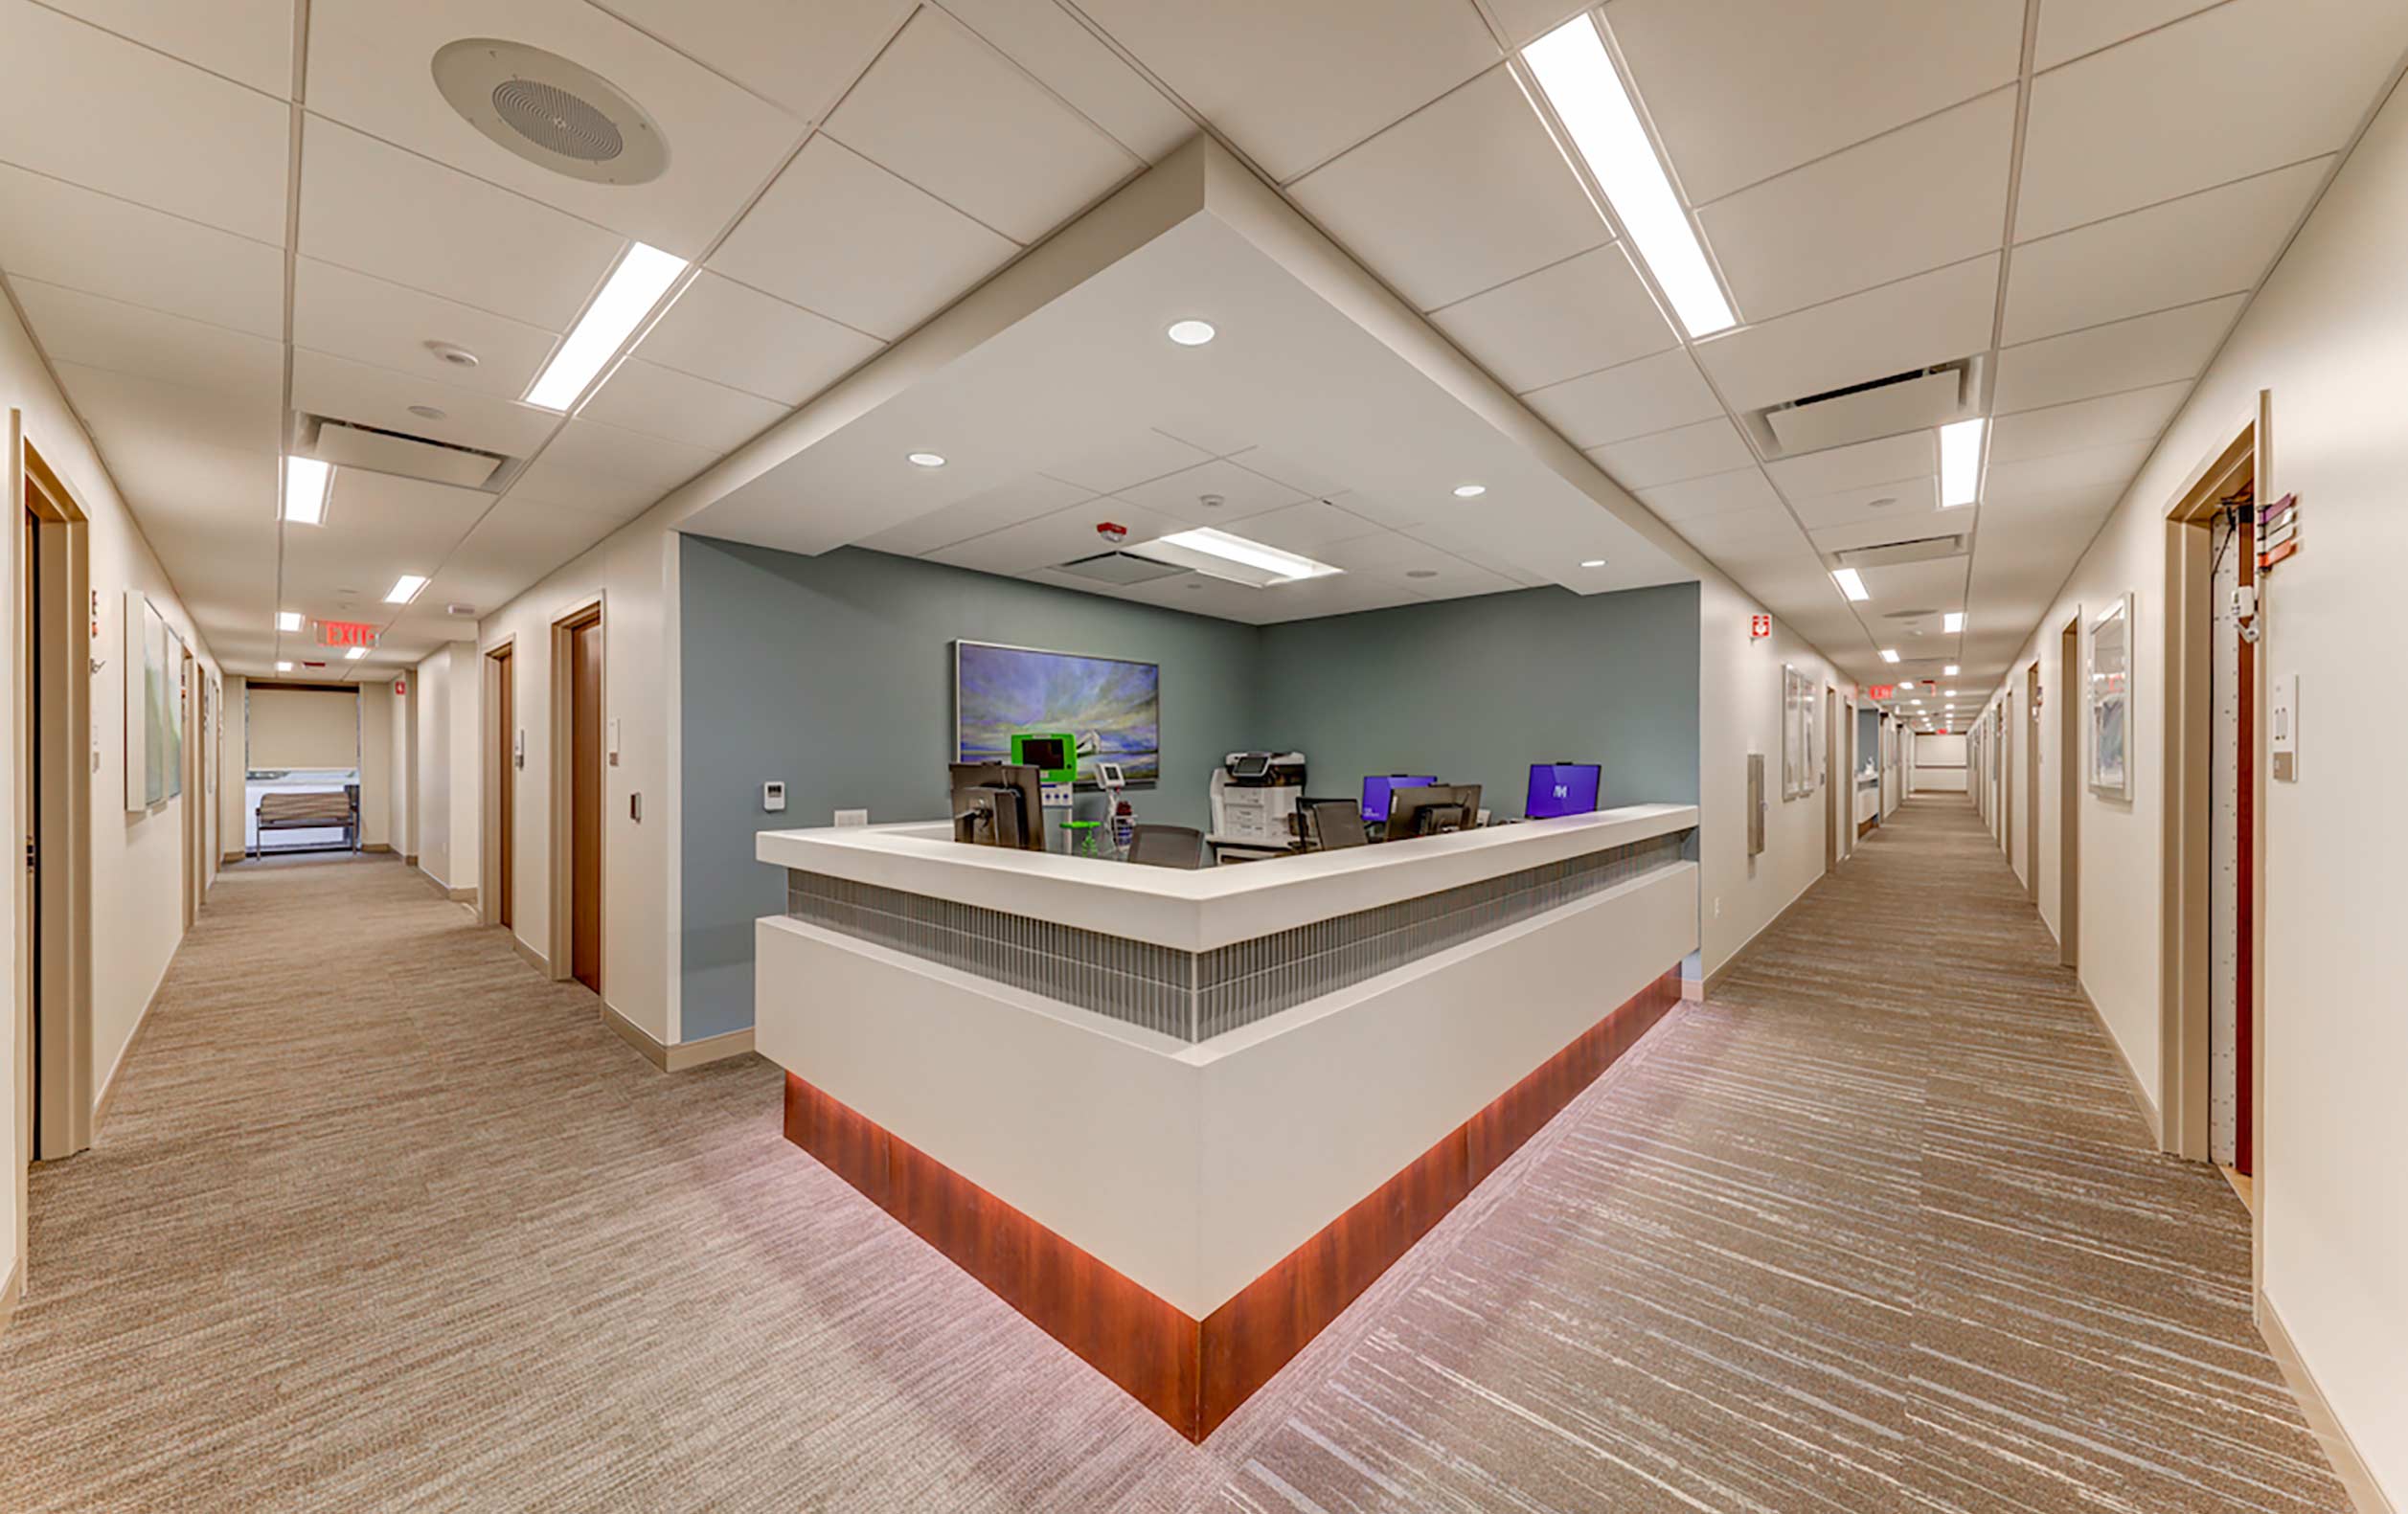 Spine health center nurse station and corridor